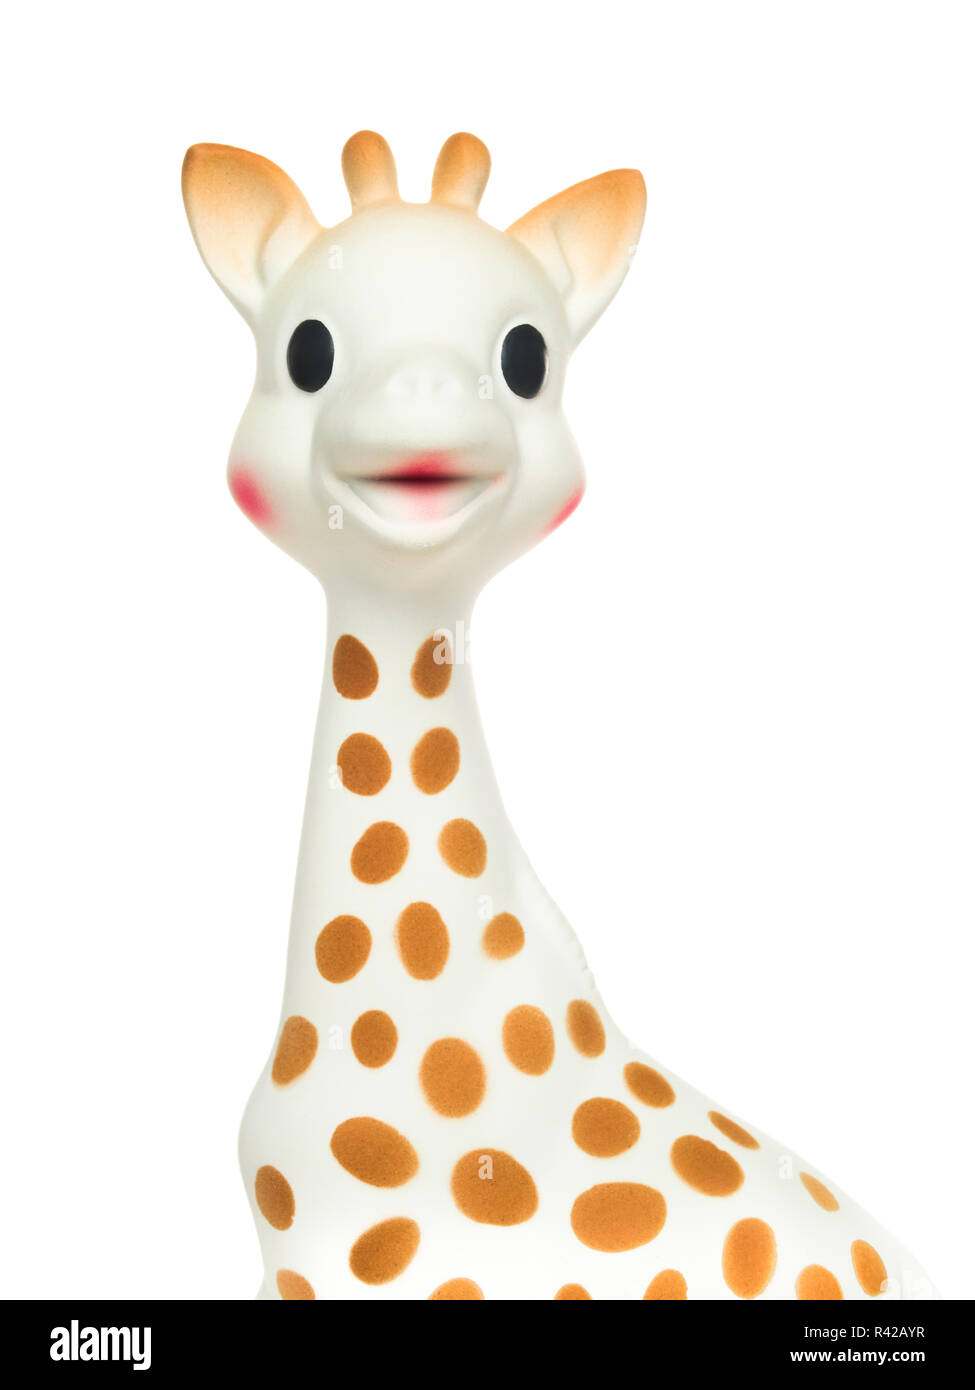 https://c8.alamy.com/comp/R42AYR/sophie-la-girafe-iconic-baby-toy-R42AYR.jpg